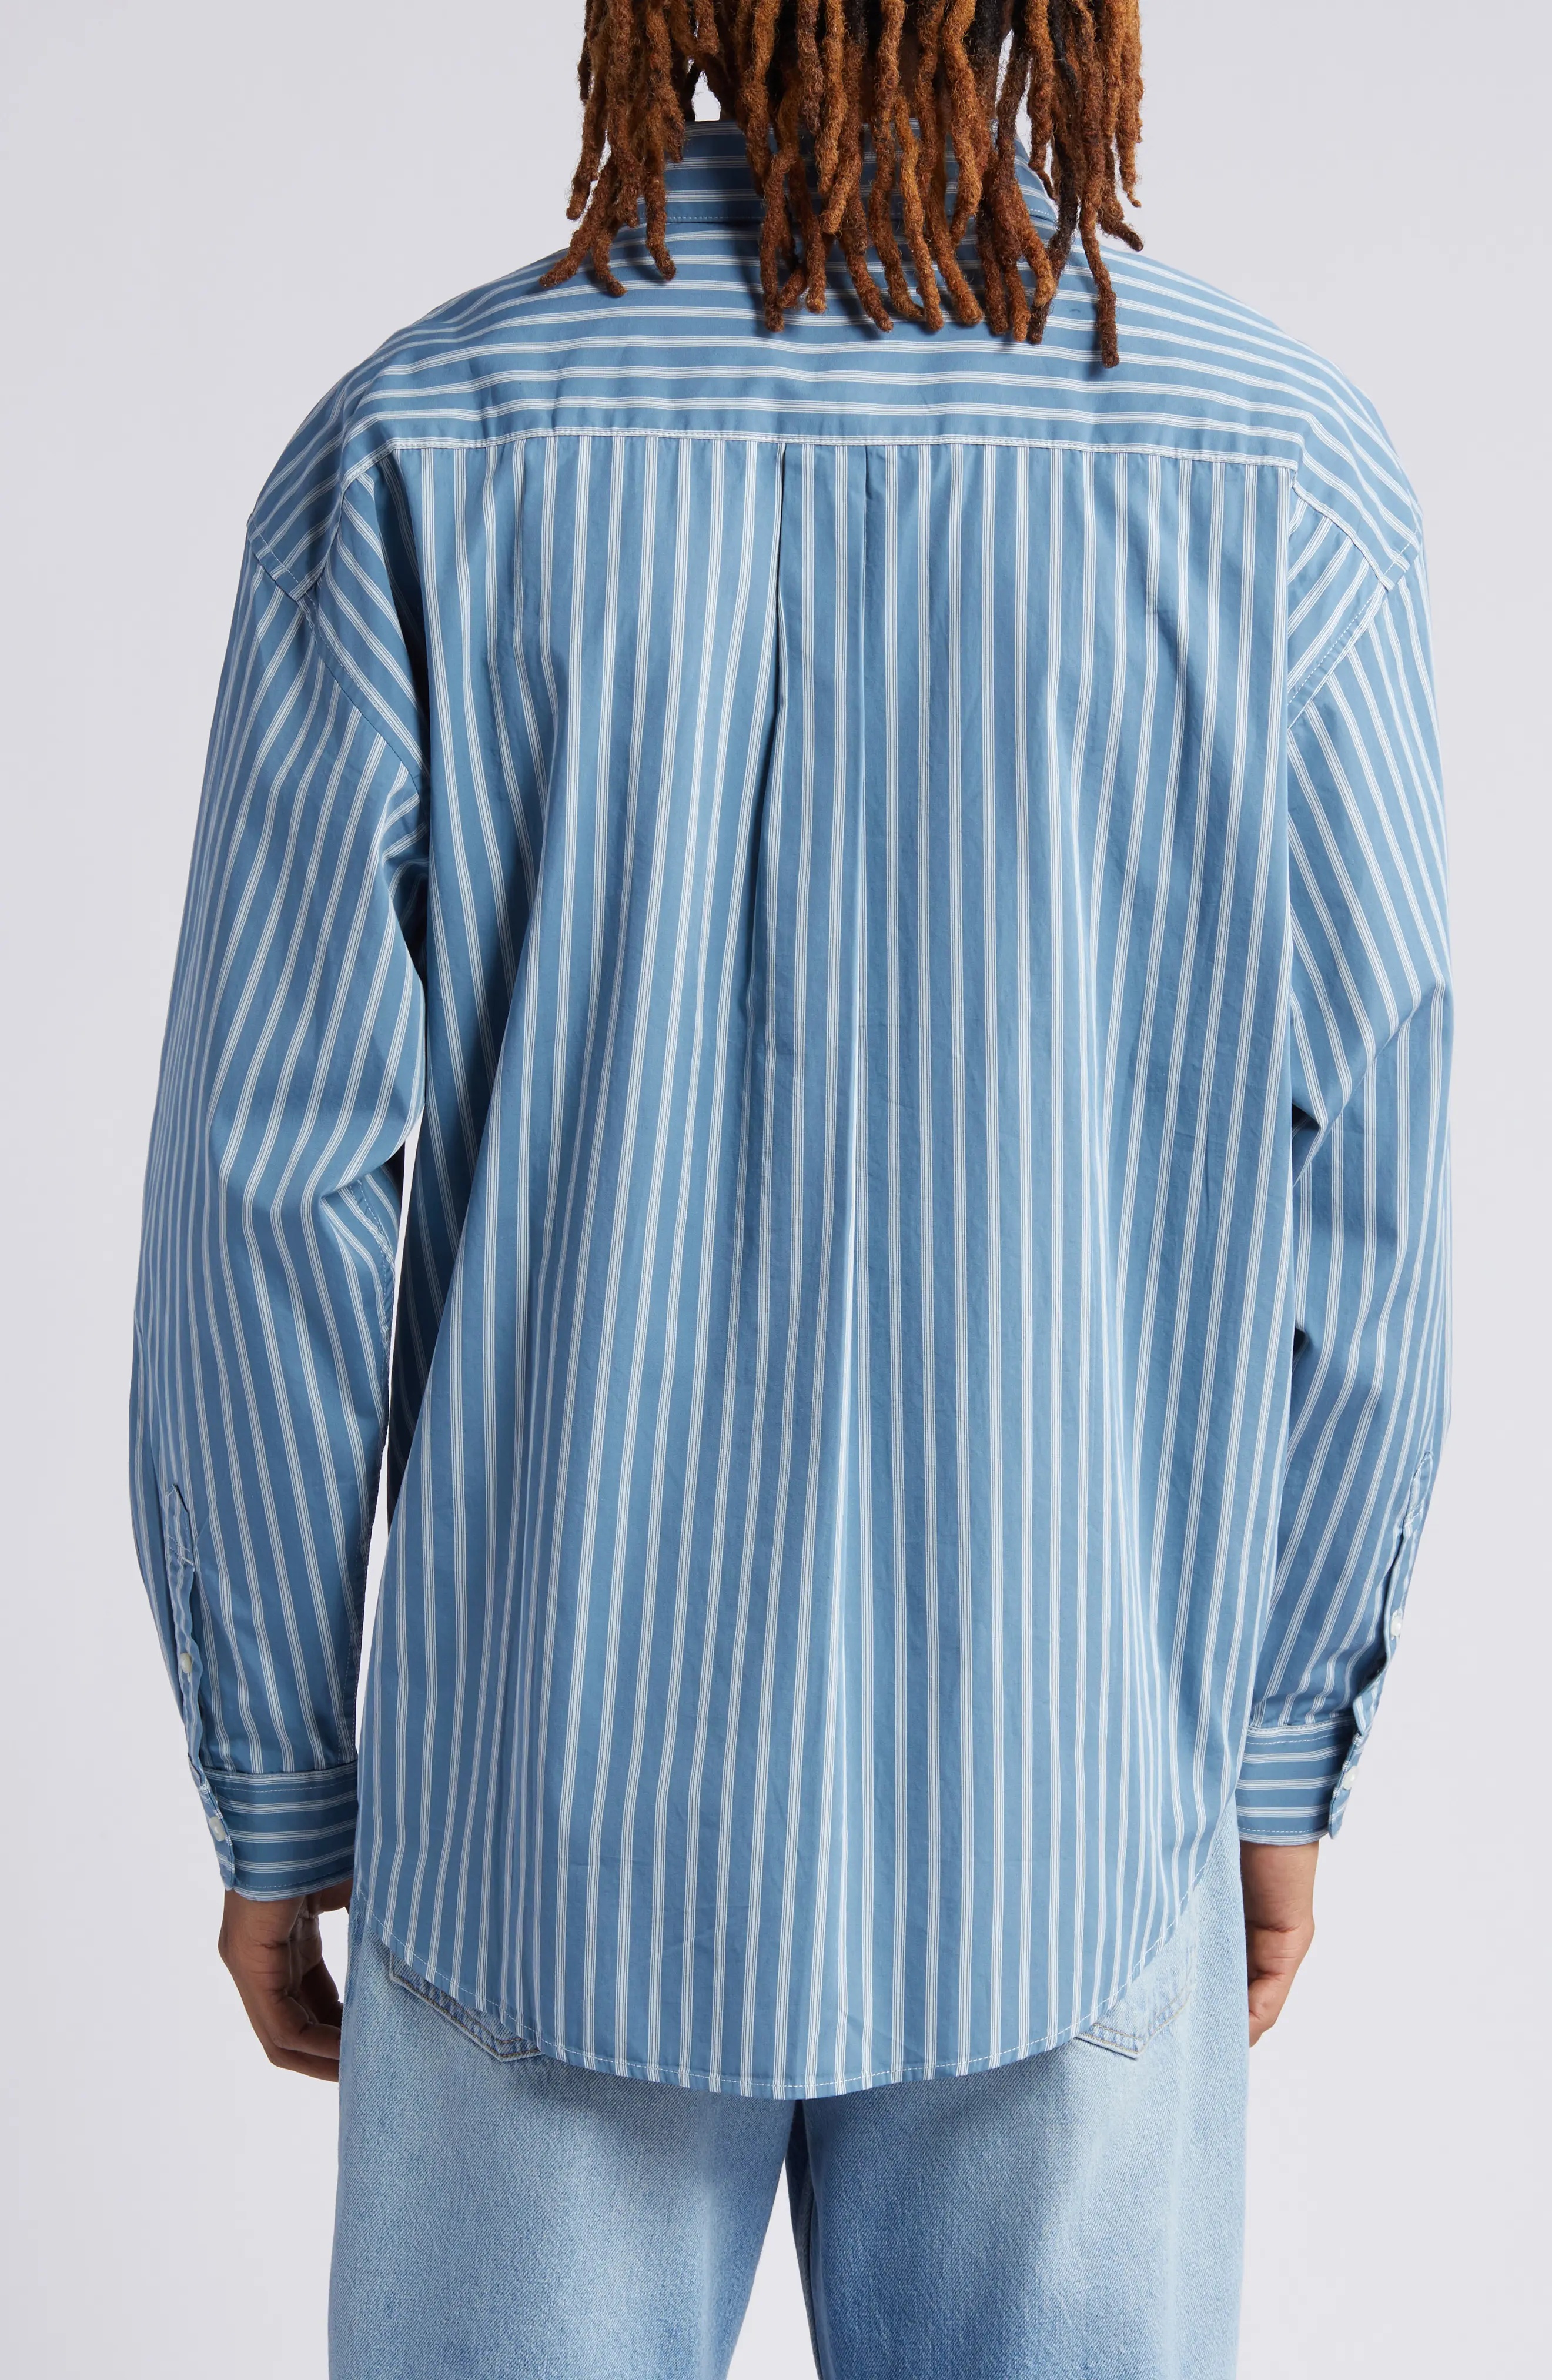 Ligety Stripe Button-Up Shirt in Ligety Stripe Blue/Wax - 3